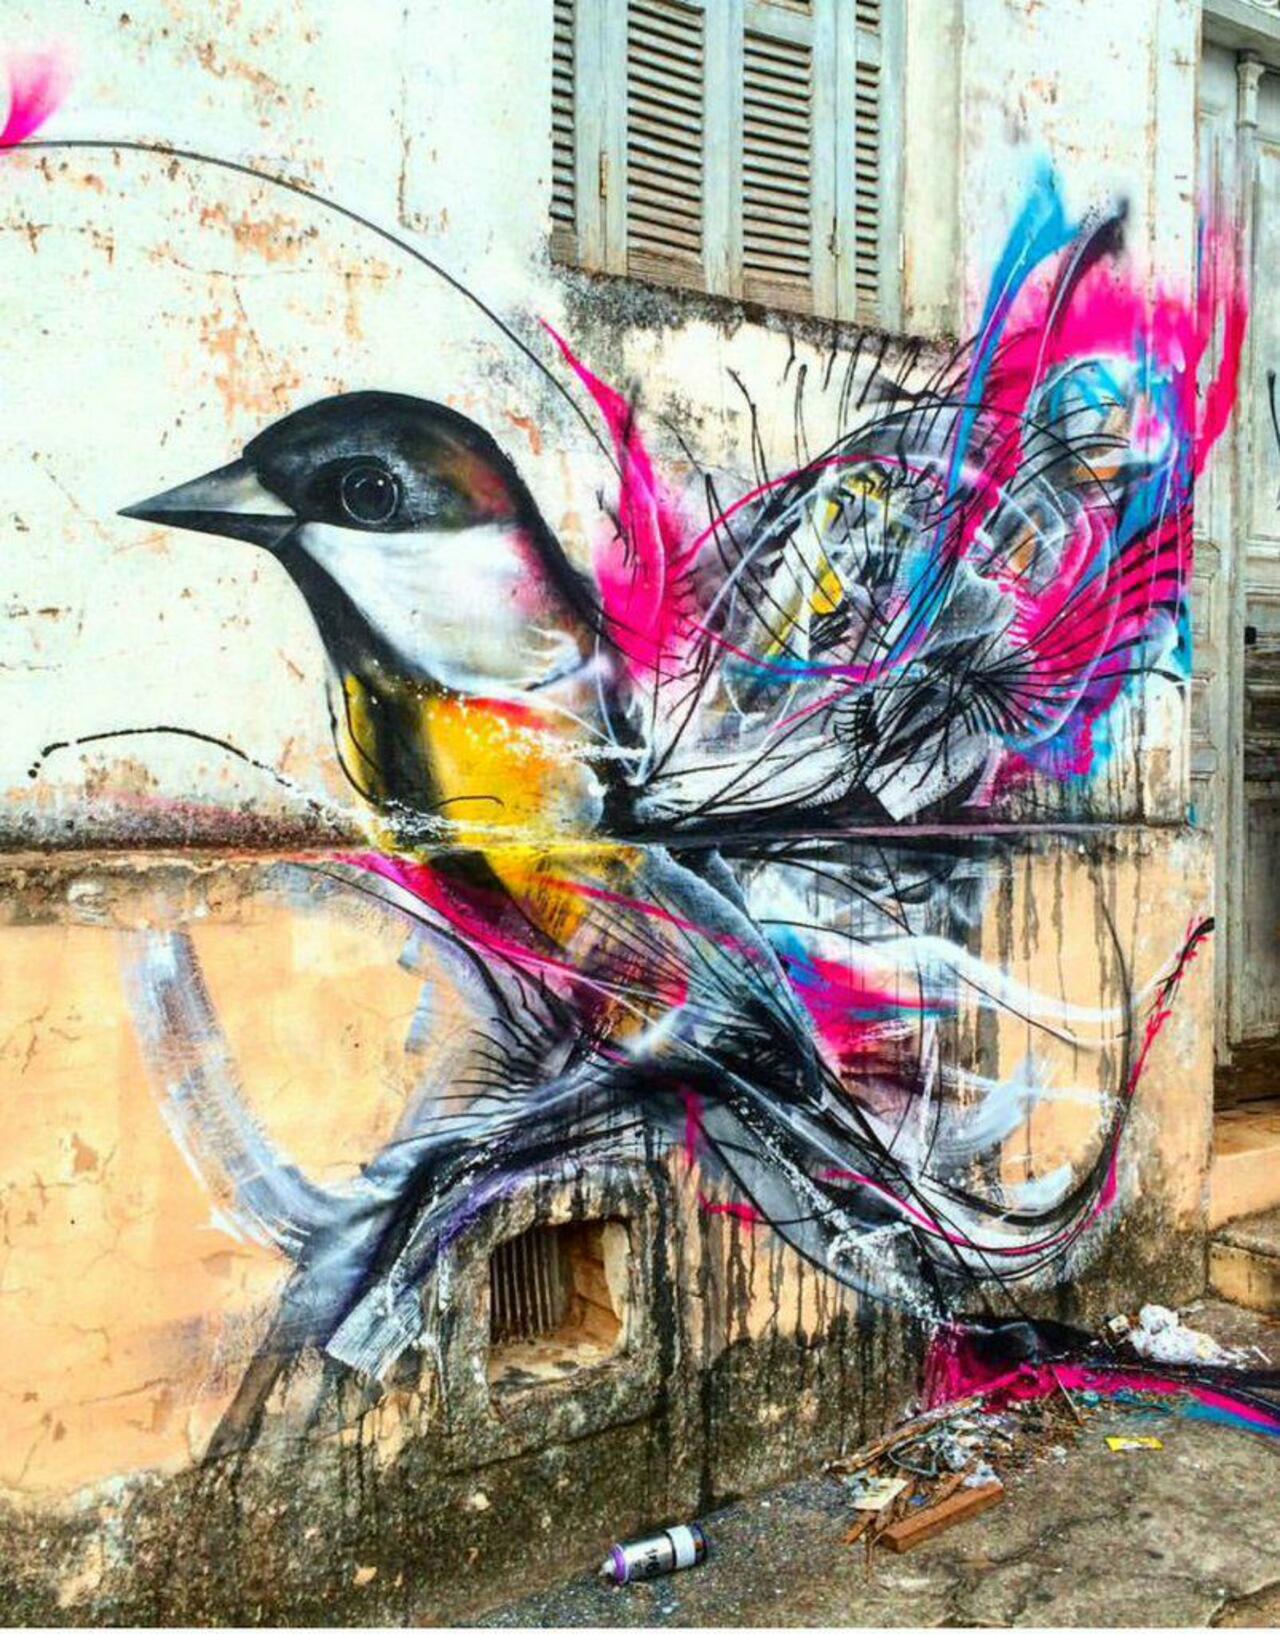 #art by #L7M #birds #hummingbird from #Brazil #graffiti #streetart #mural #cityscape #loveit on #instagram @l7matrix http://t.co/1vvMRMyfil